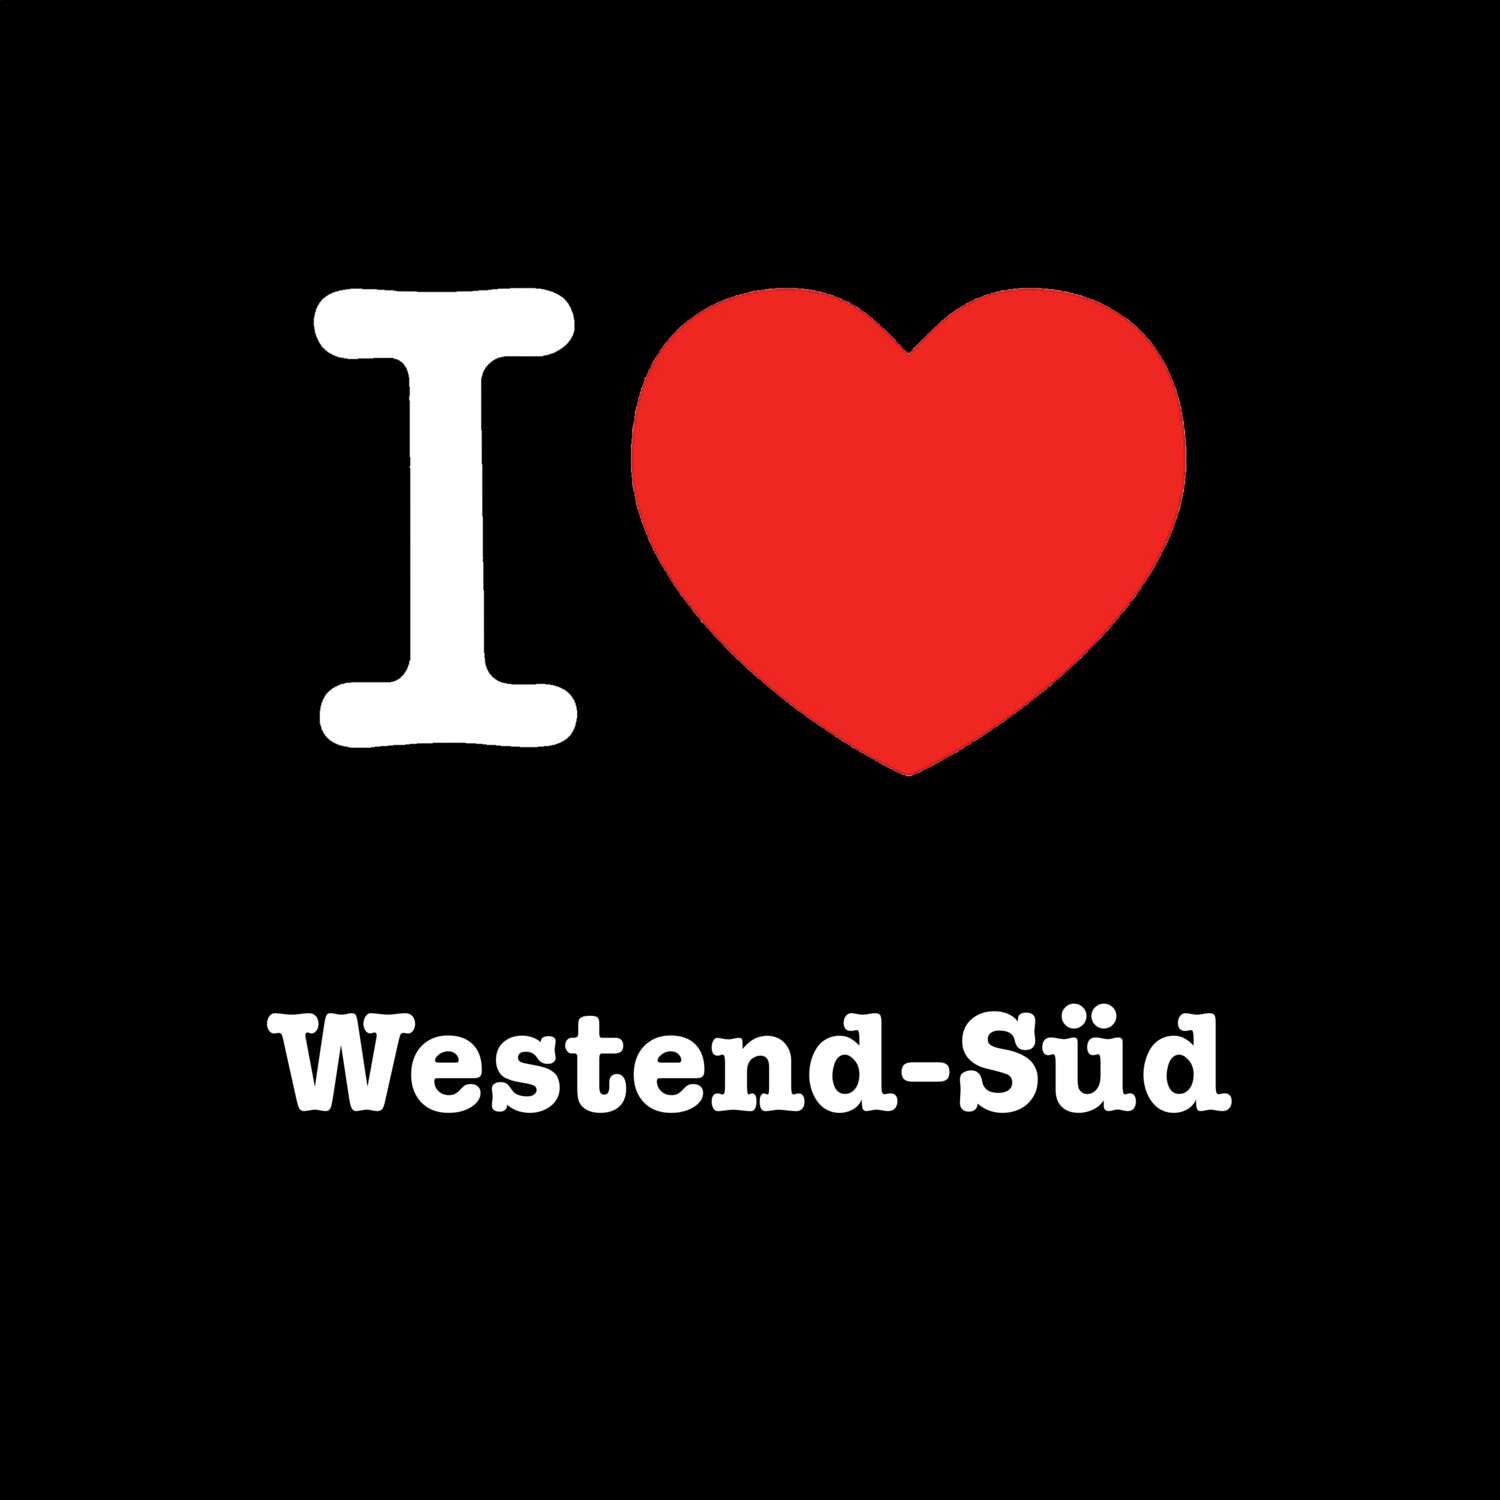 Westend-Süd T-Shirt »I love«